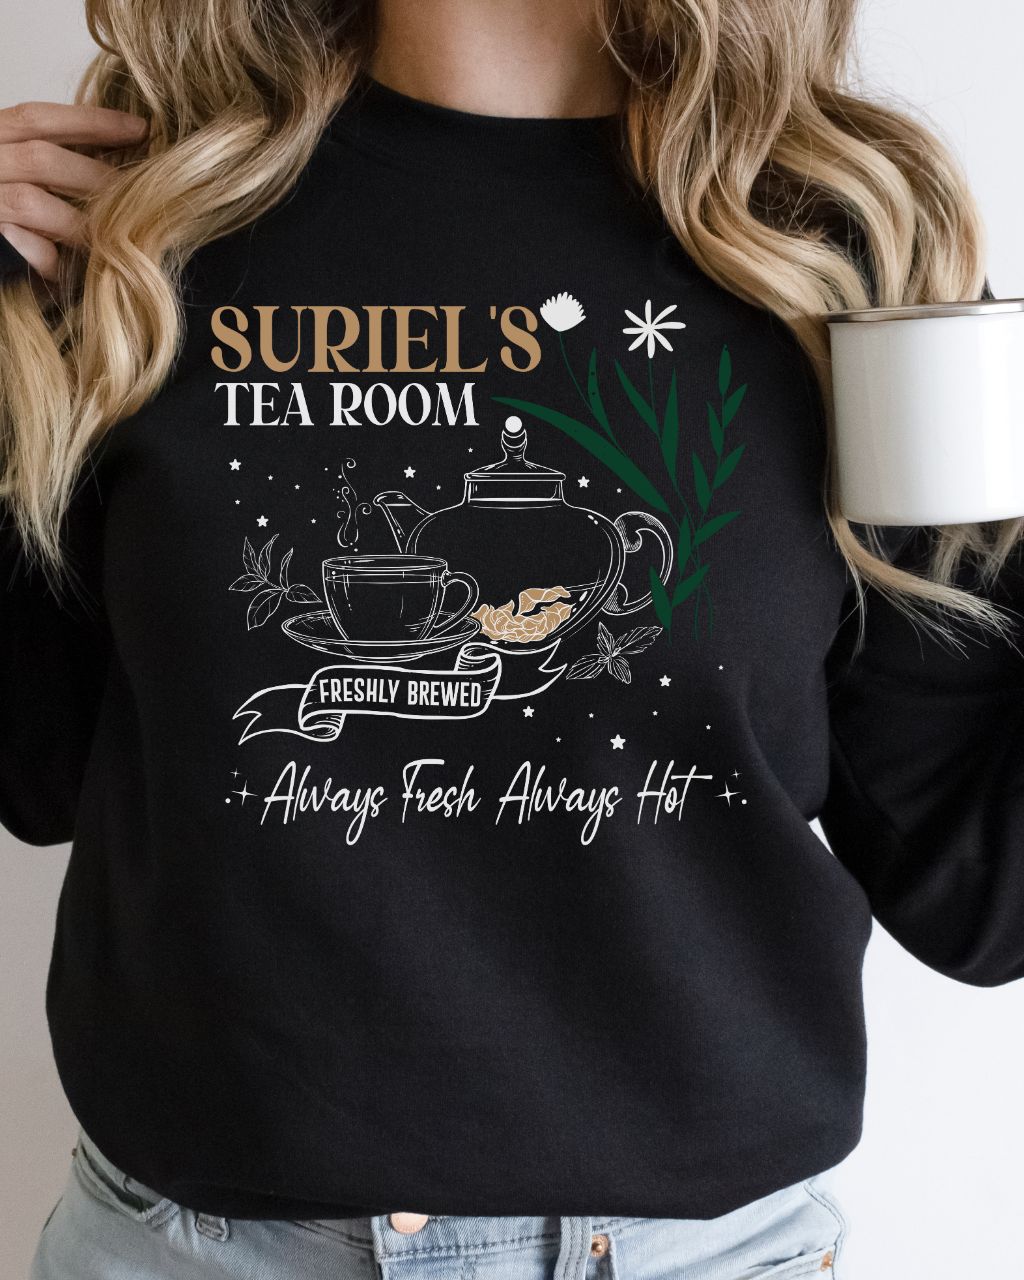 Suriel's Tea Room Sweatshirt - ACOTAR Velaris Sarah J. Maas Inspired Sweater